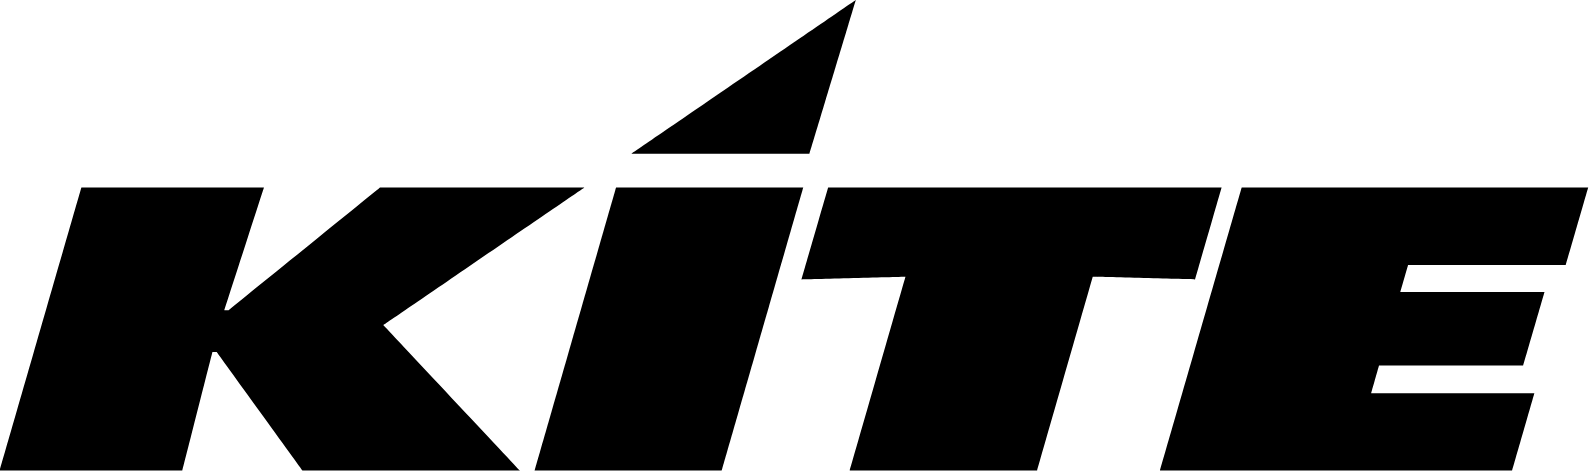 Kite Realty logo (PNG transparent)